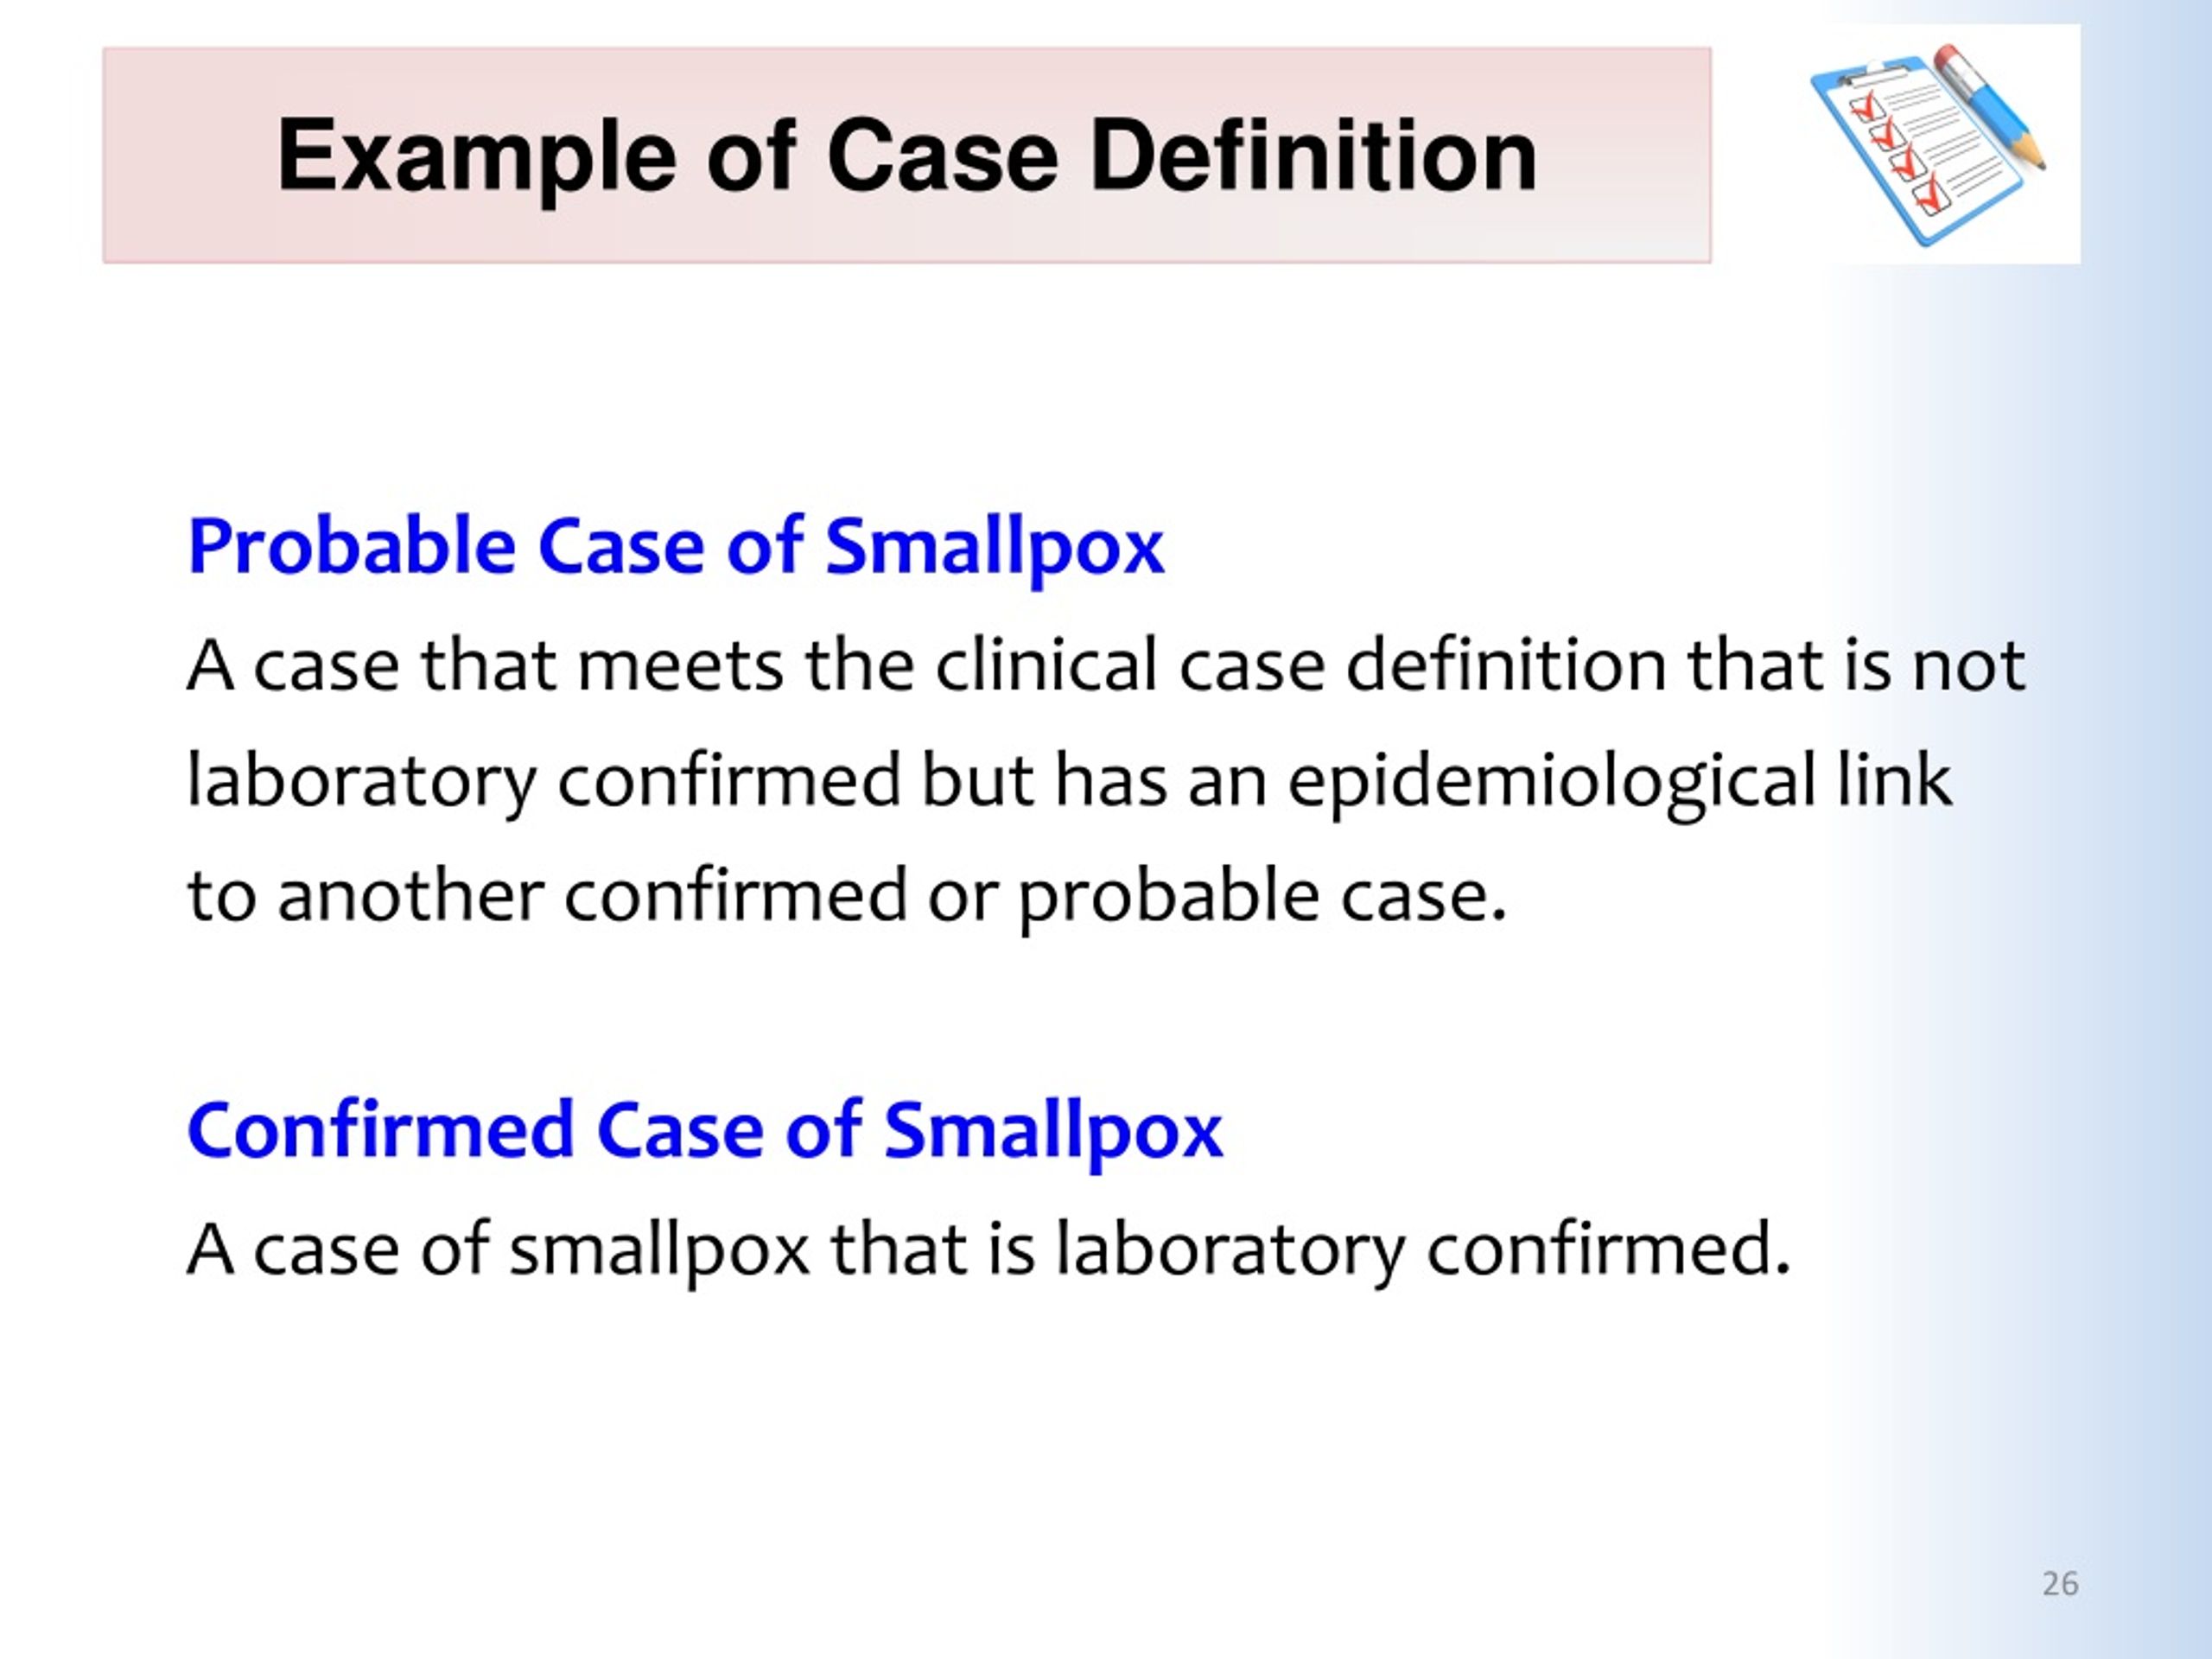 definition of case presentation